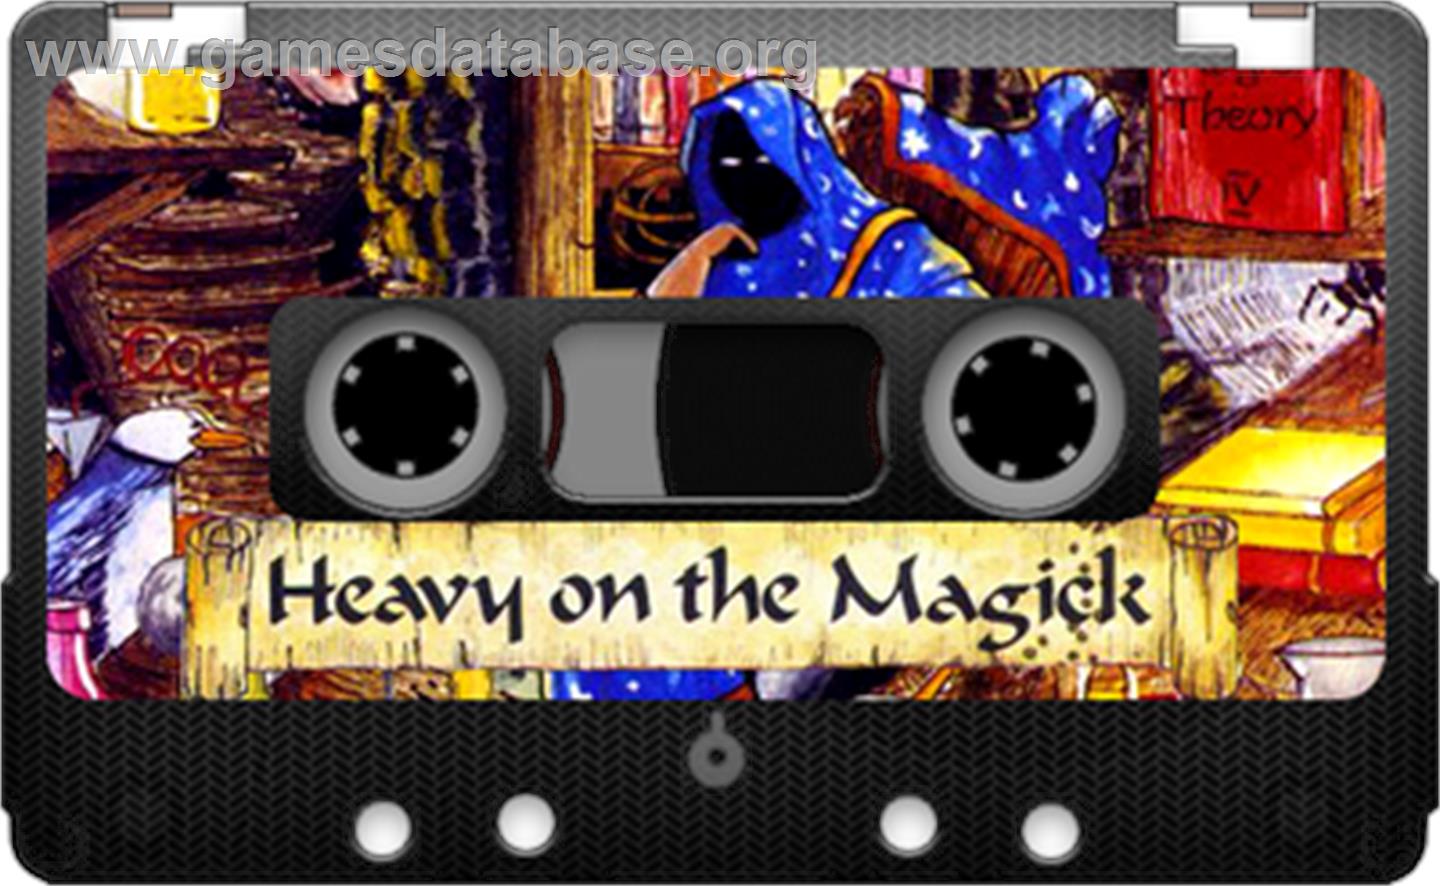 Heavy on the Magick - Sinclair ZX Spectrum - Artwork - Cartridge